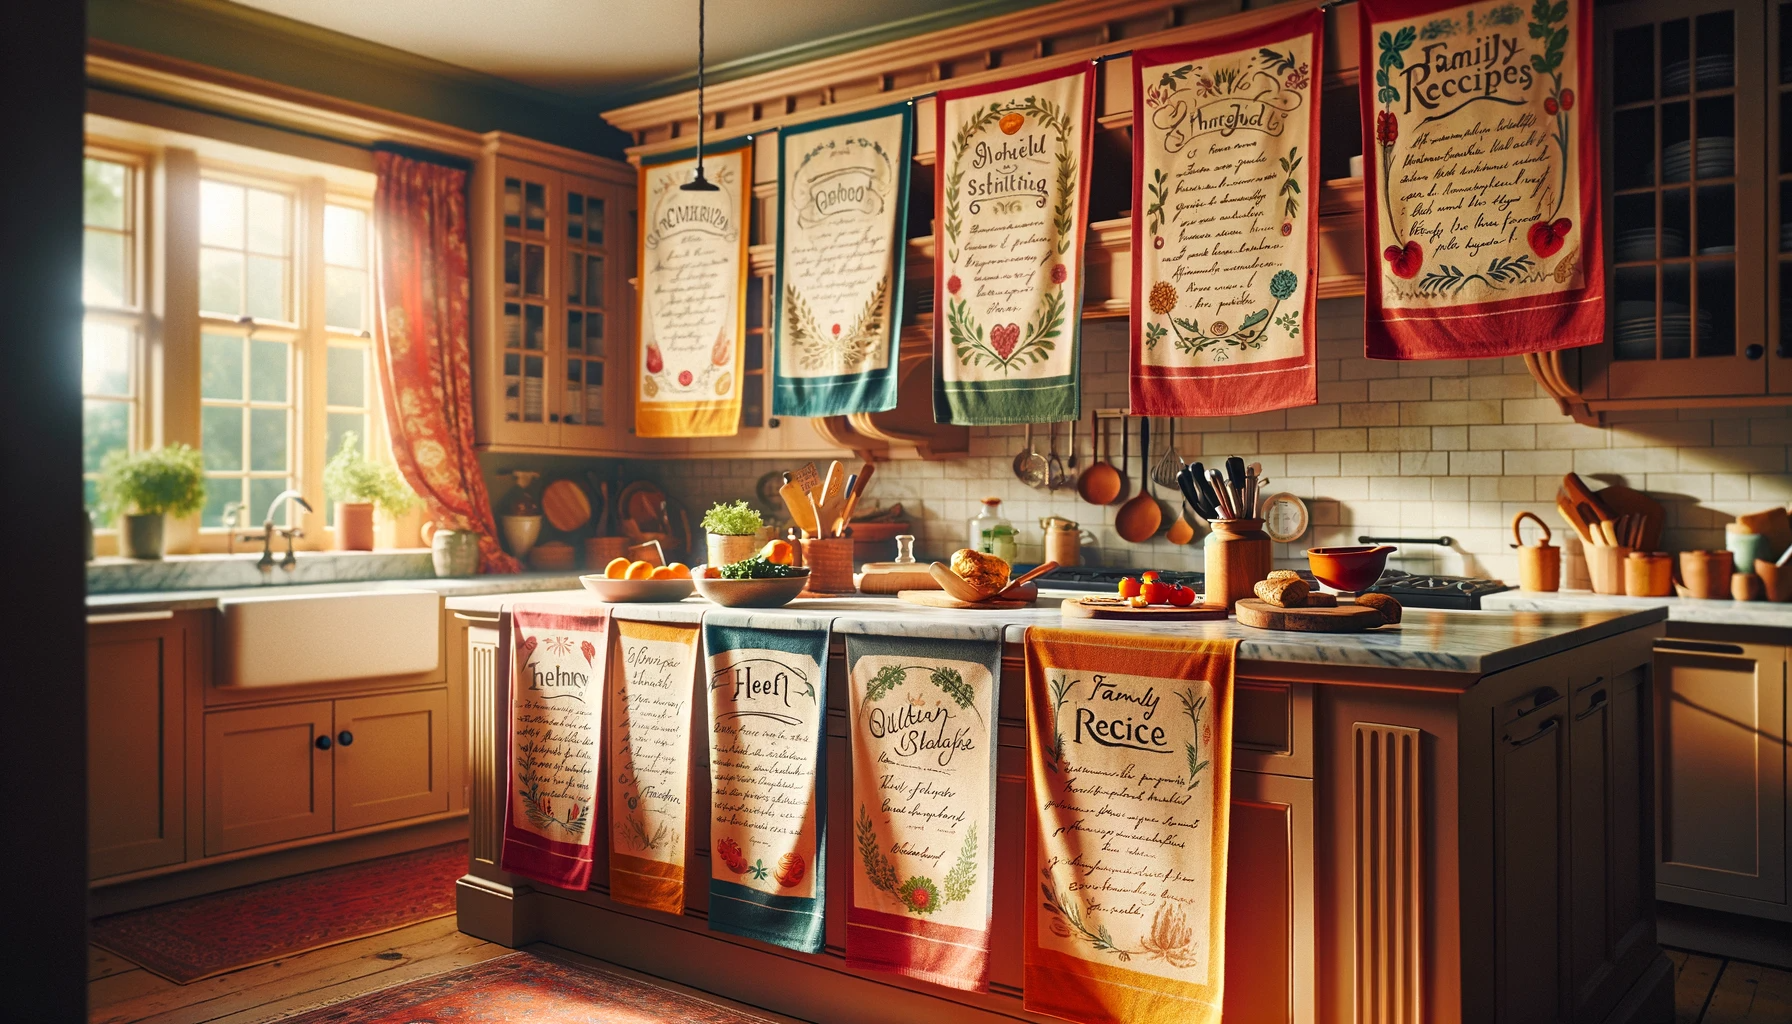 Rustic Tea Towels.  Screen printing, Trendy kitchen colors, Dish